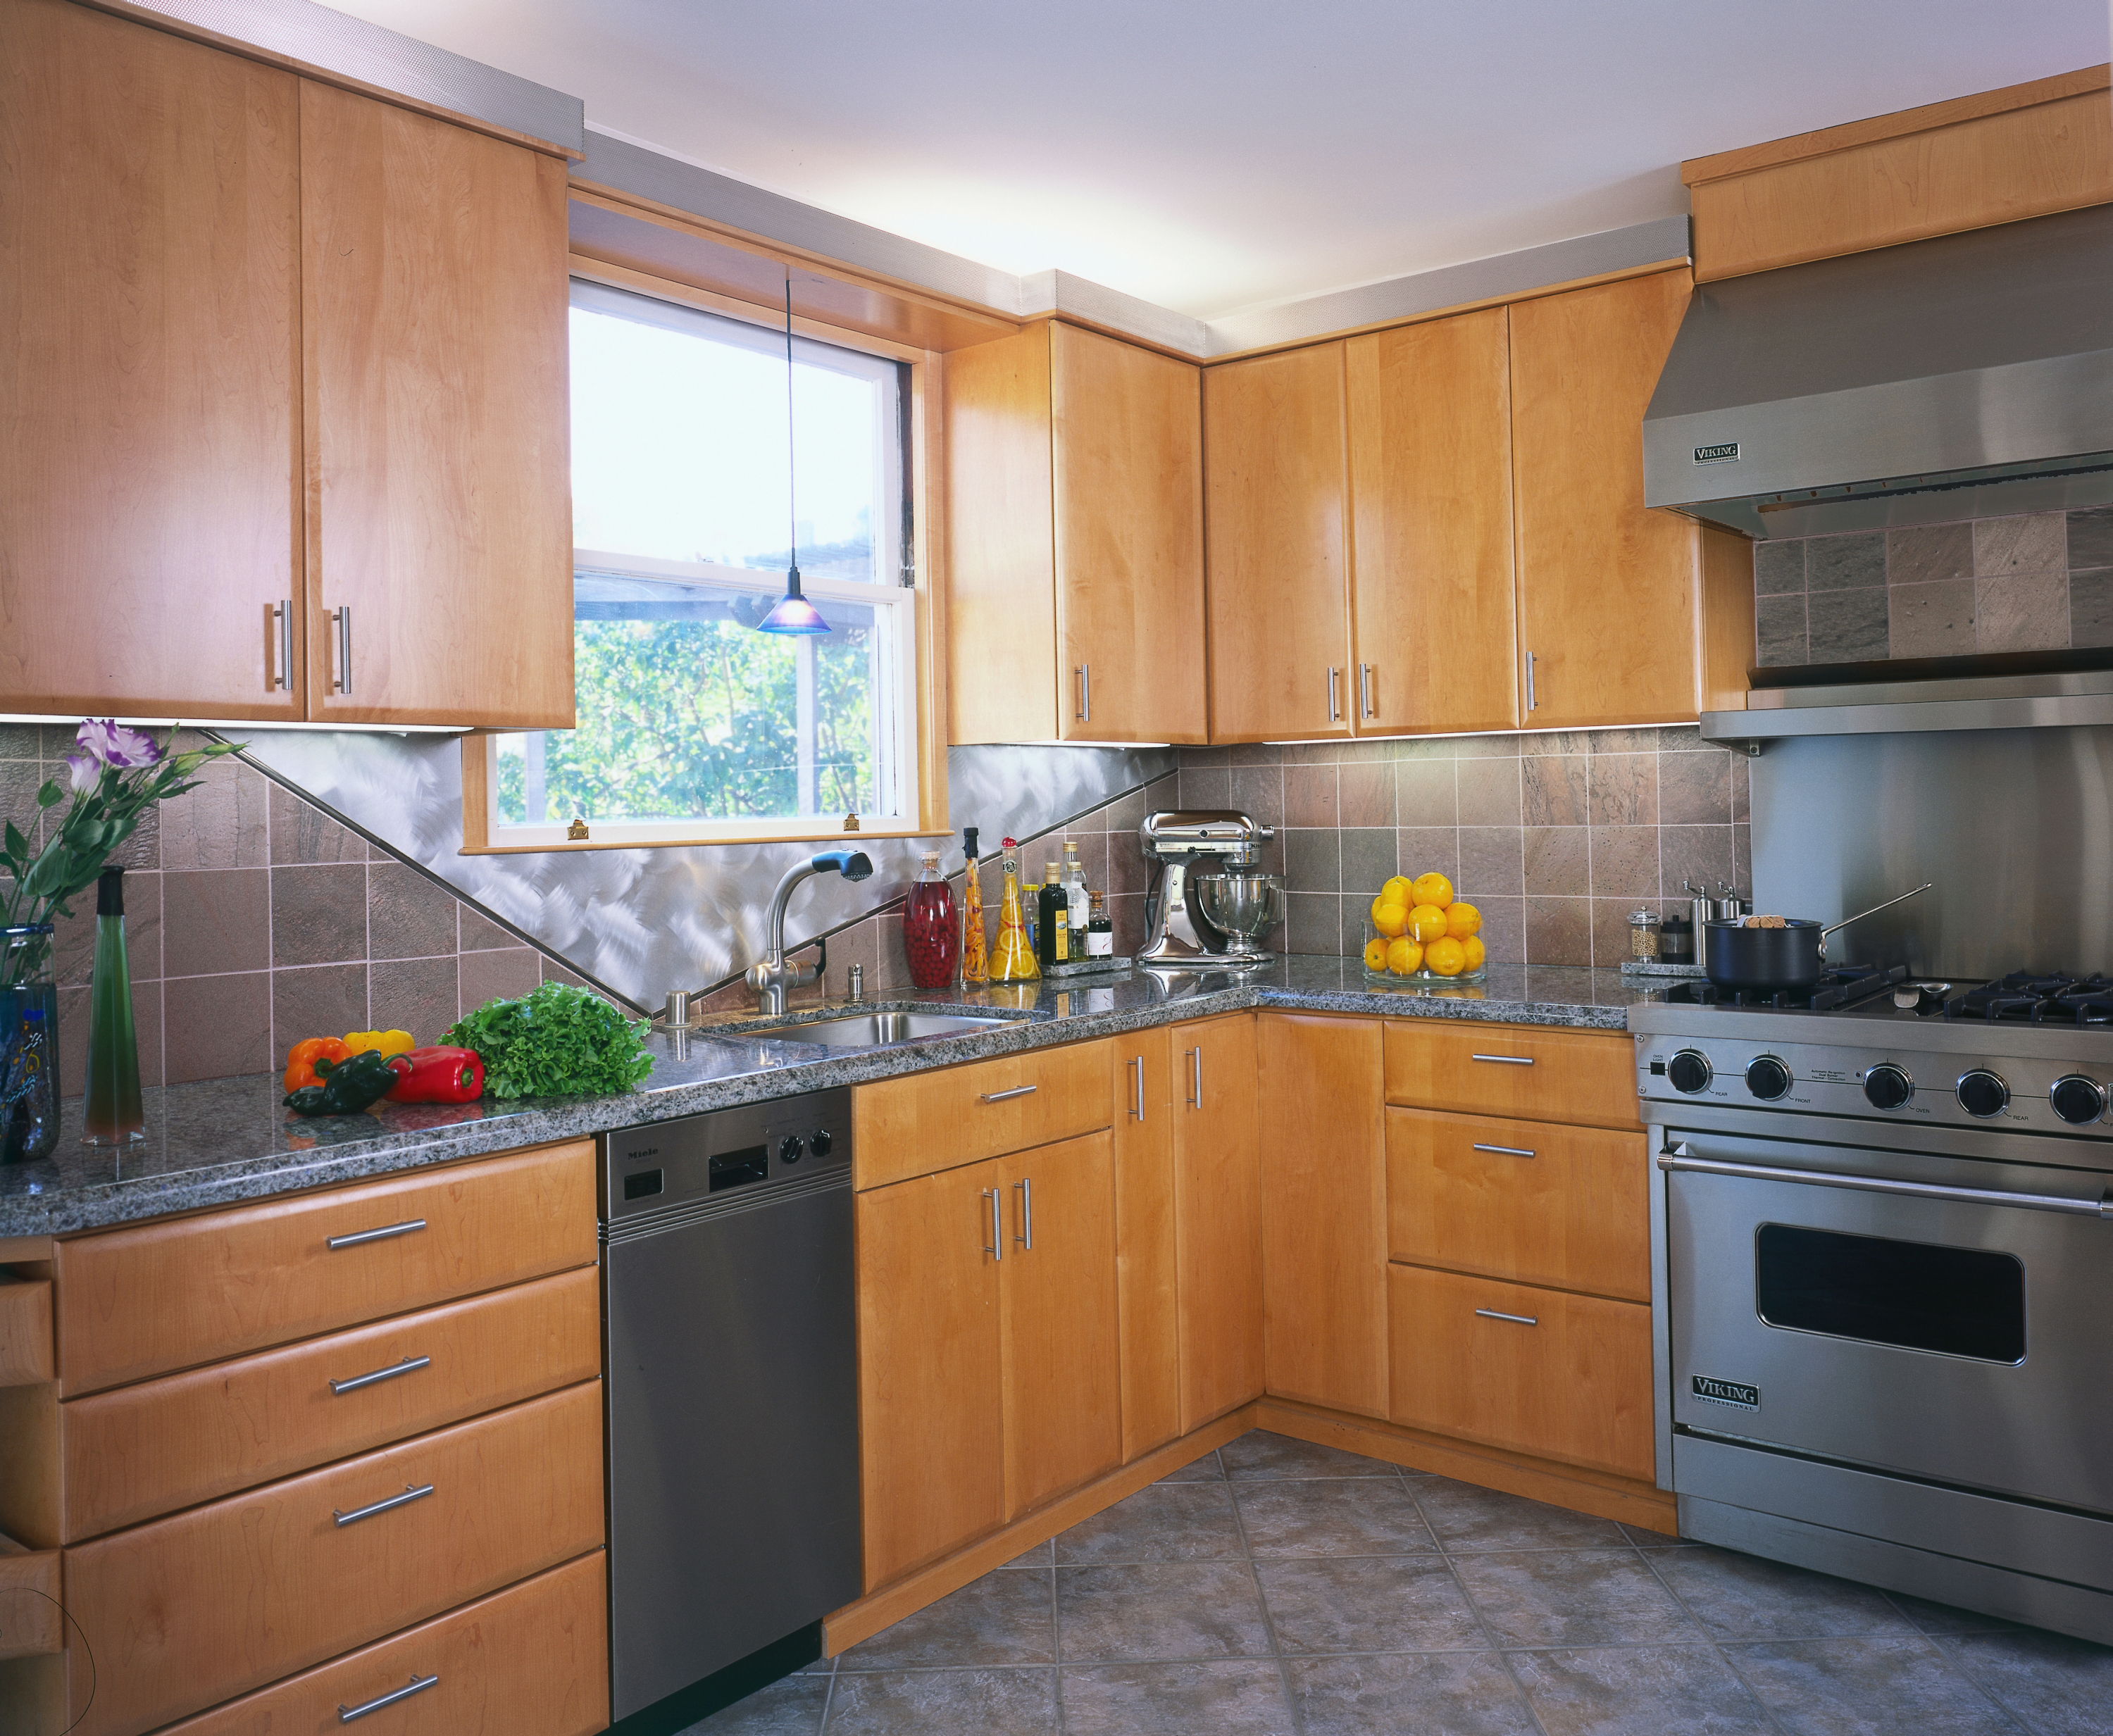 InterSpace Design - Kitchen Remodel showing Slate and Stainless Steel Backsplash